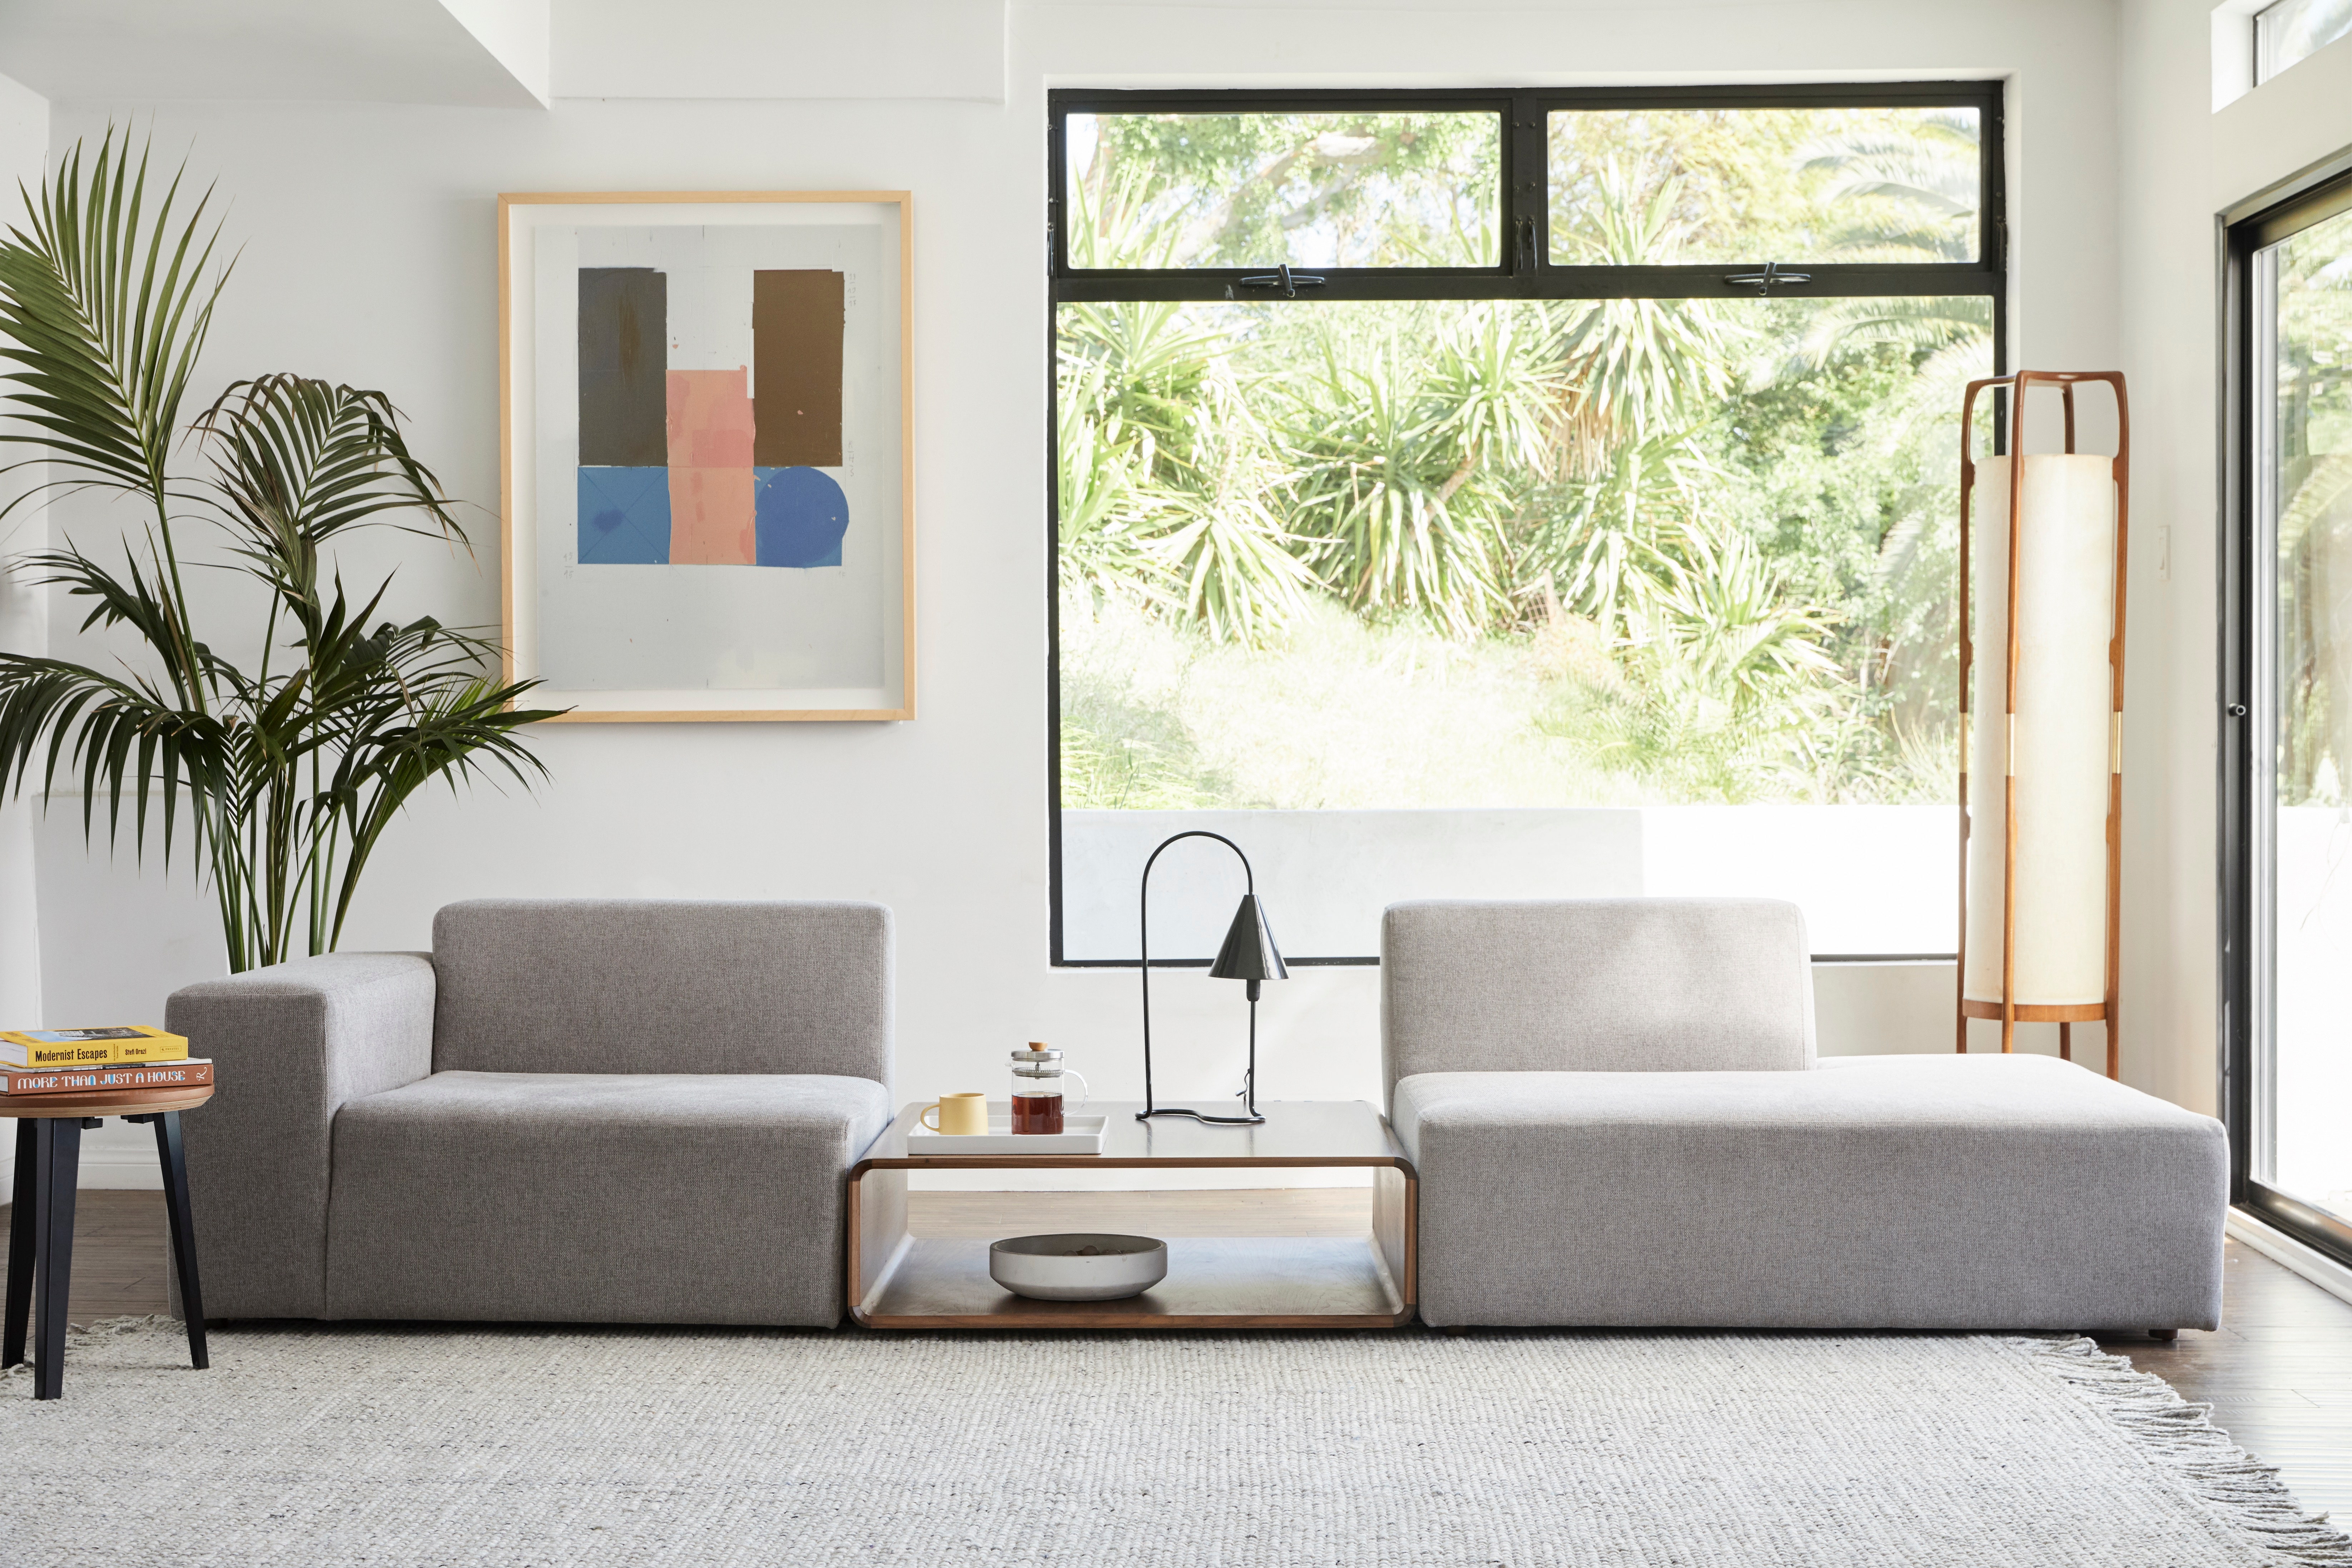 Modular Sofas: The 10 Best Kept Secrets For Stylish Home Furnishings